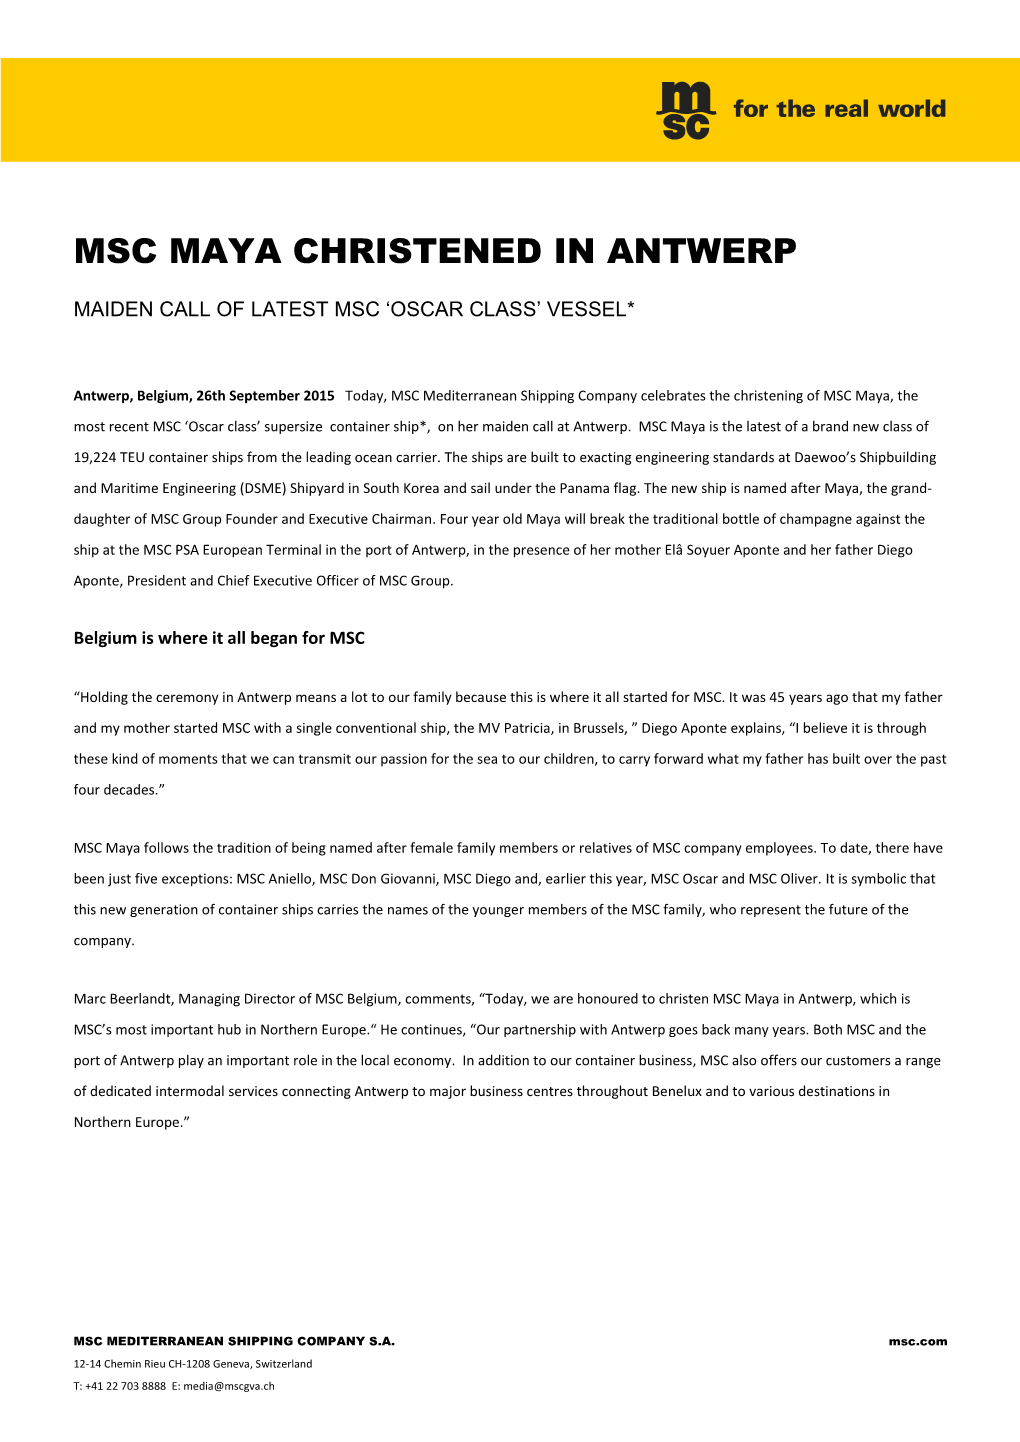 Msc Maya Christened in Antwerp